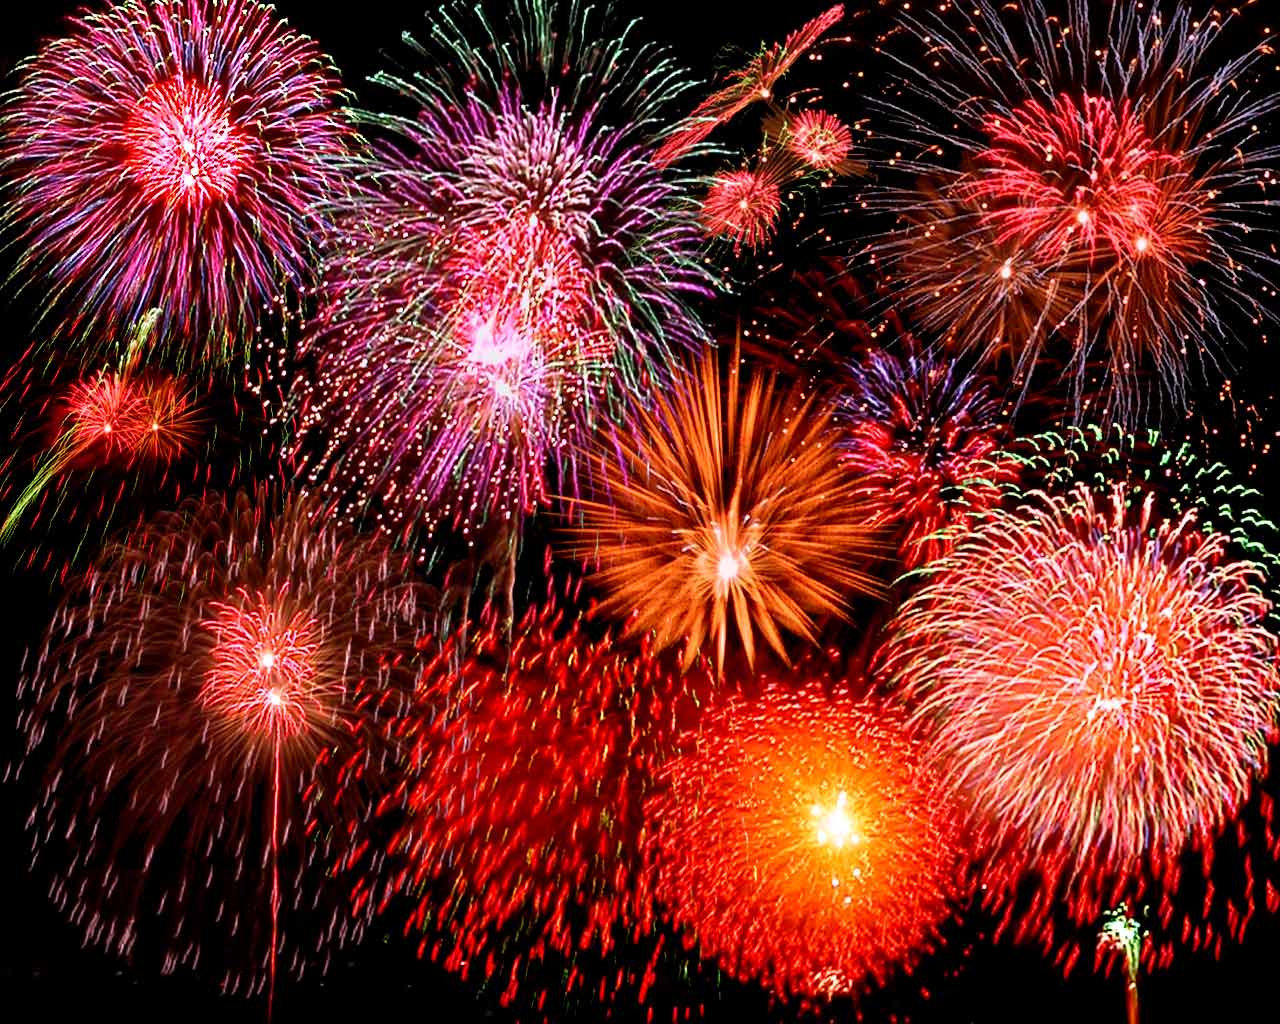 http://2.bp.blogspot.com/-MIHrMX4FVF0/UAhWW8QF_qI/AAAAAAAAAJk/JCHXJiof_64/s1600/fireworks.jpg